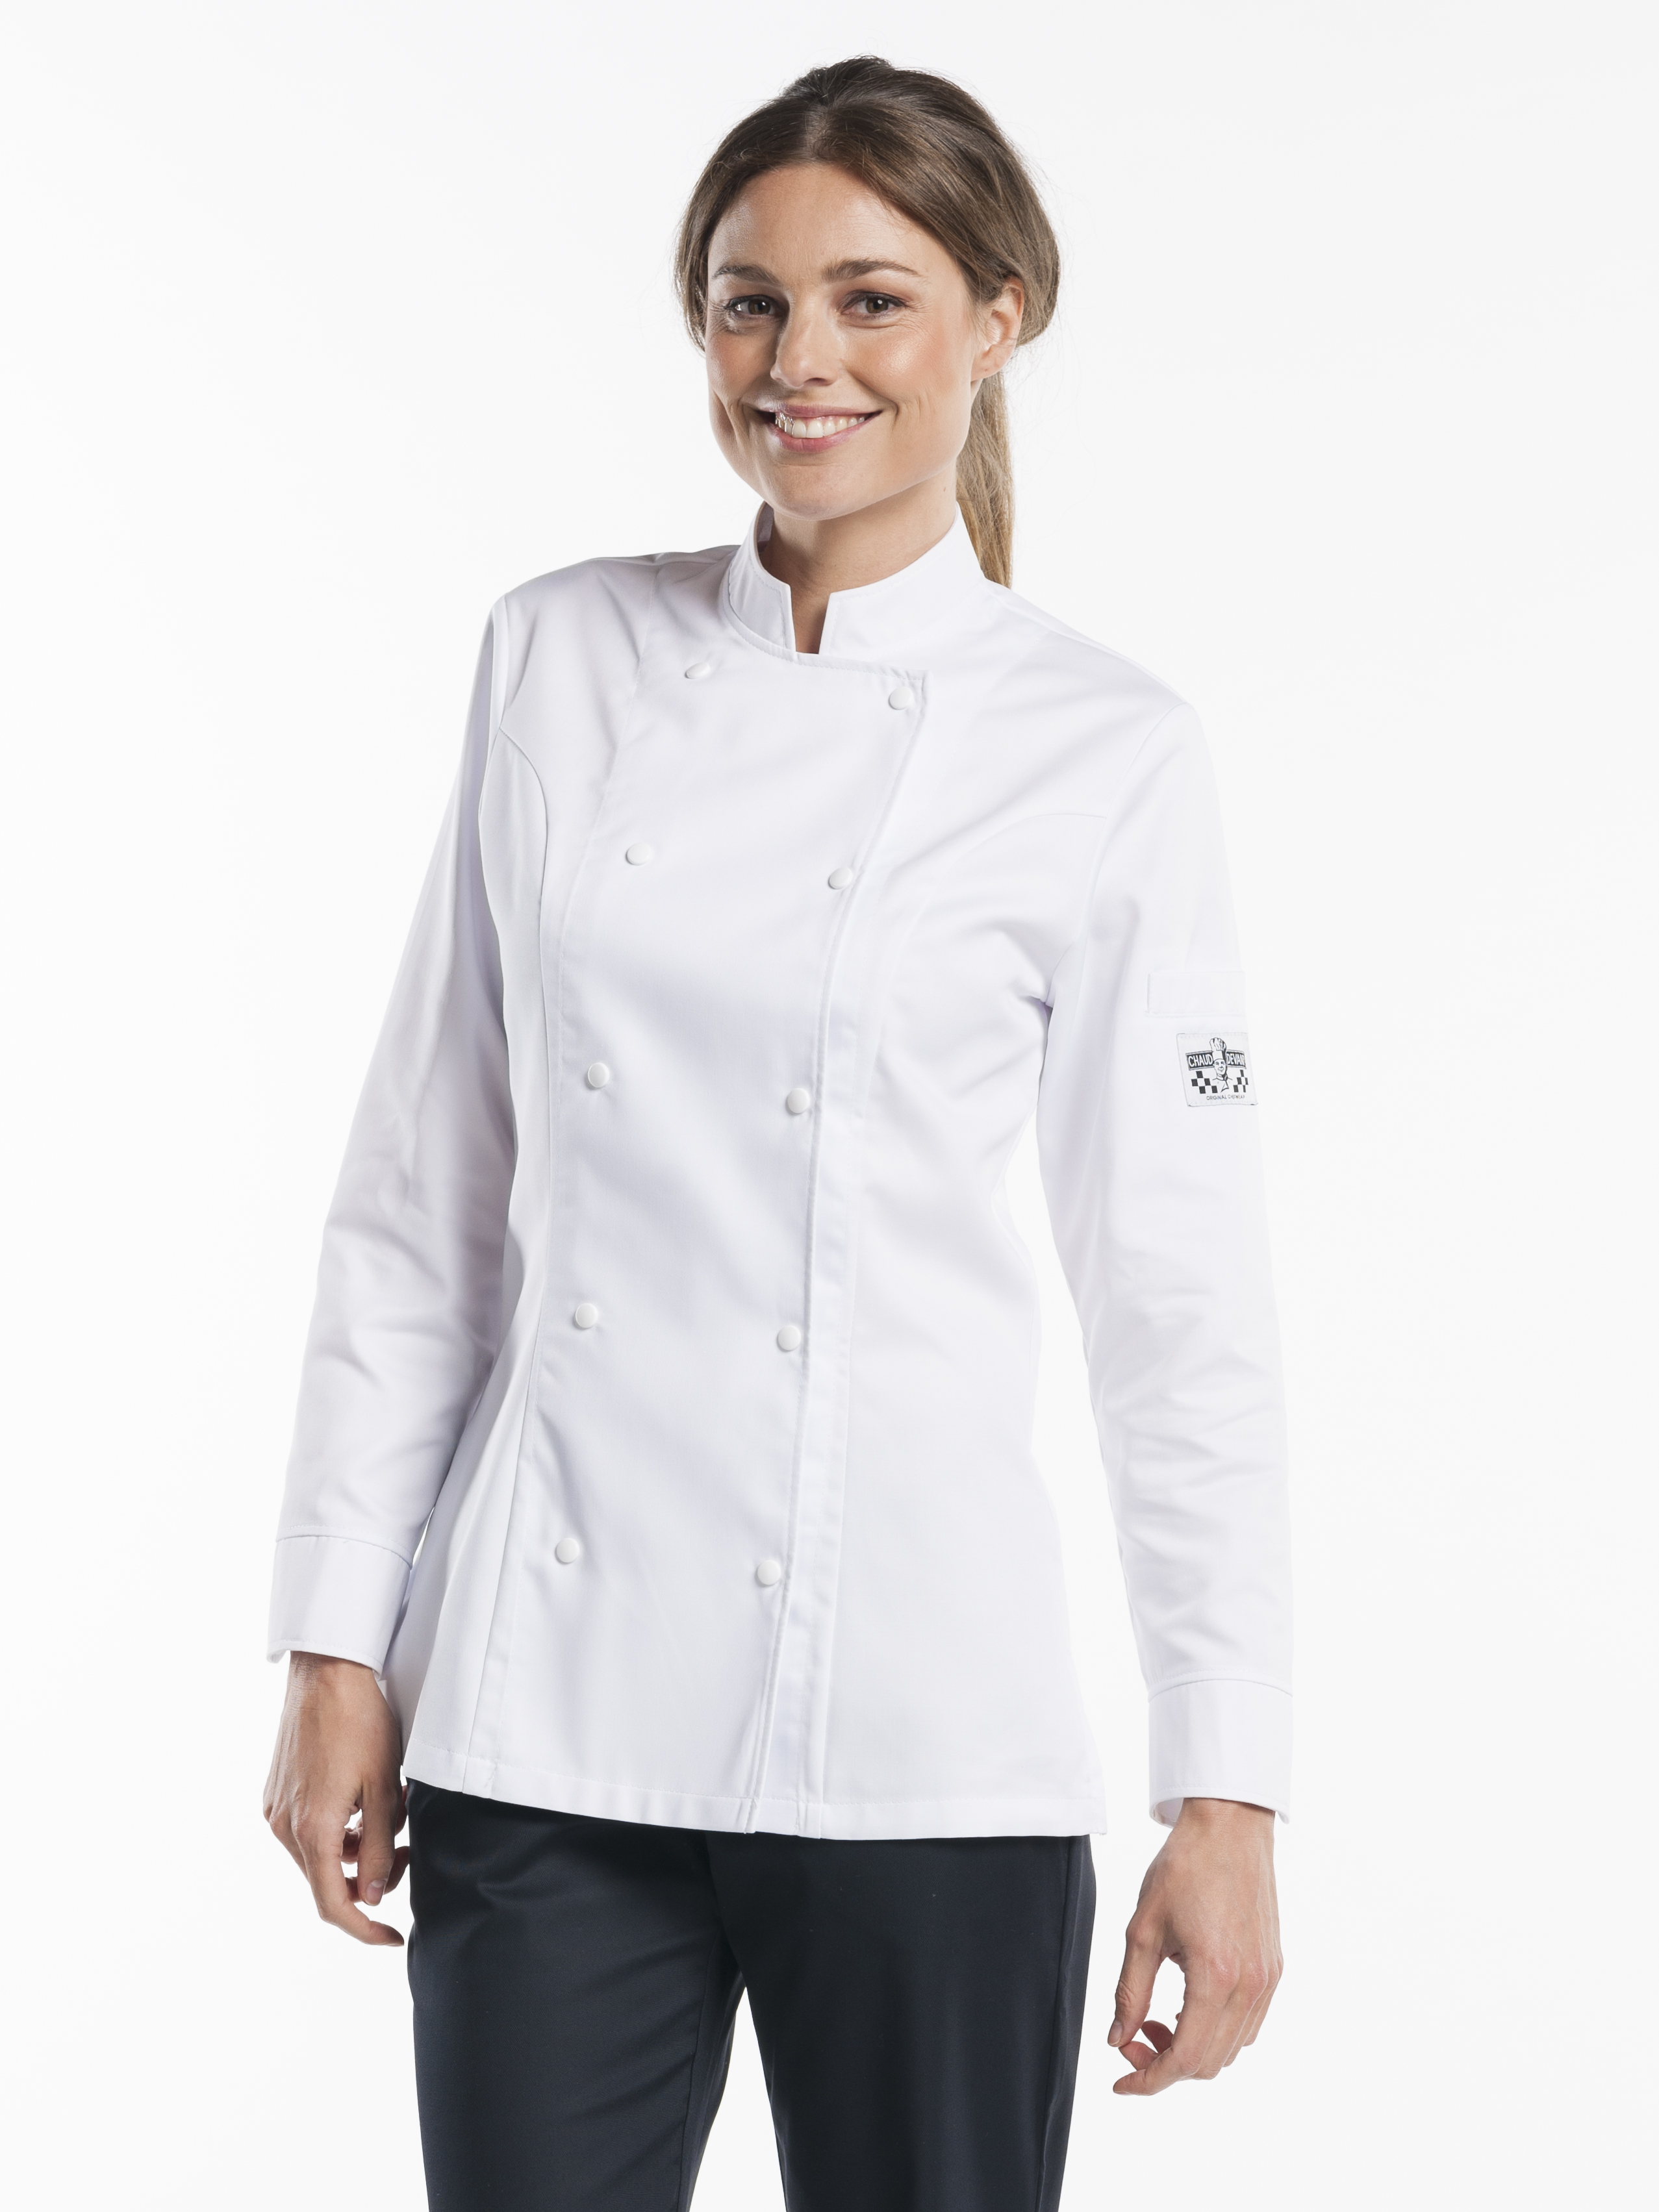 55519 Chef jacket lady comfort white maat xs